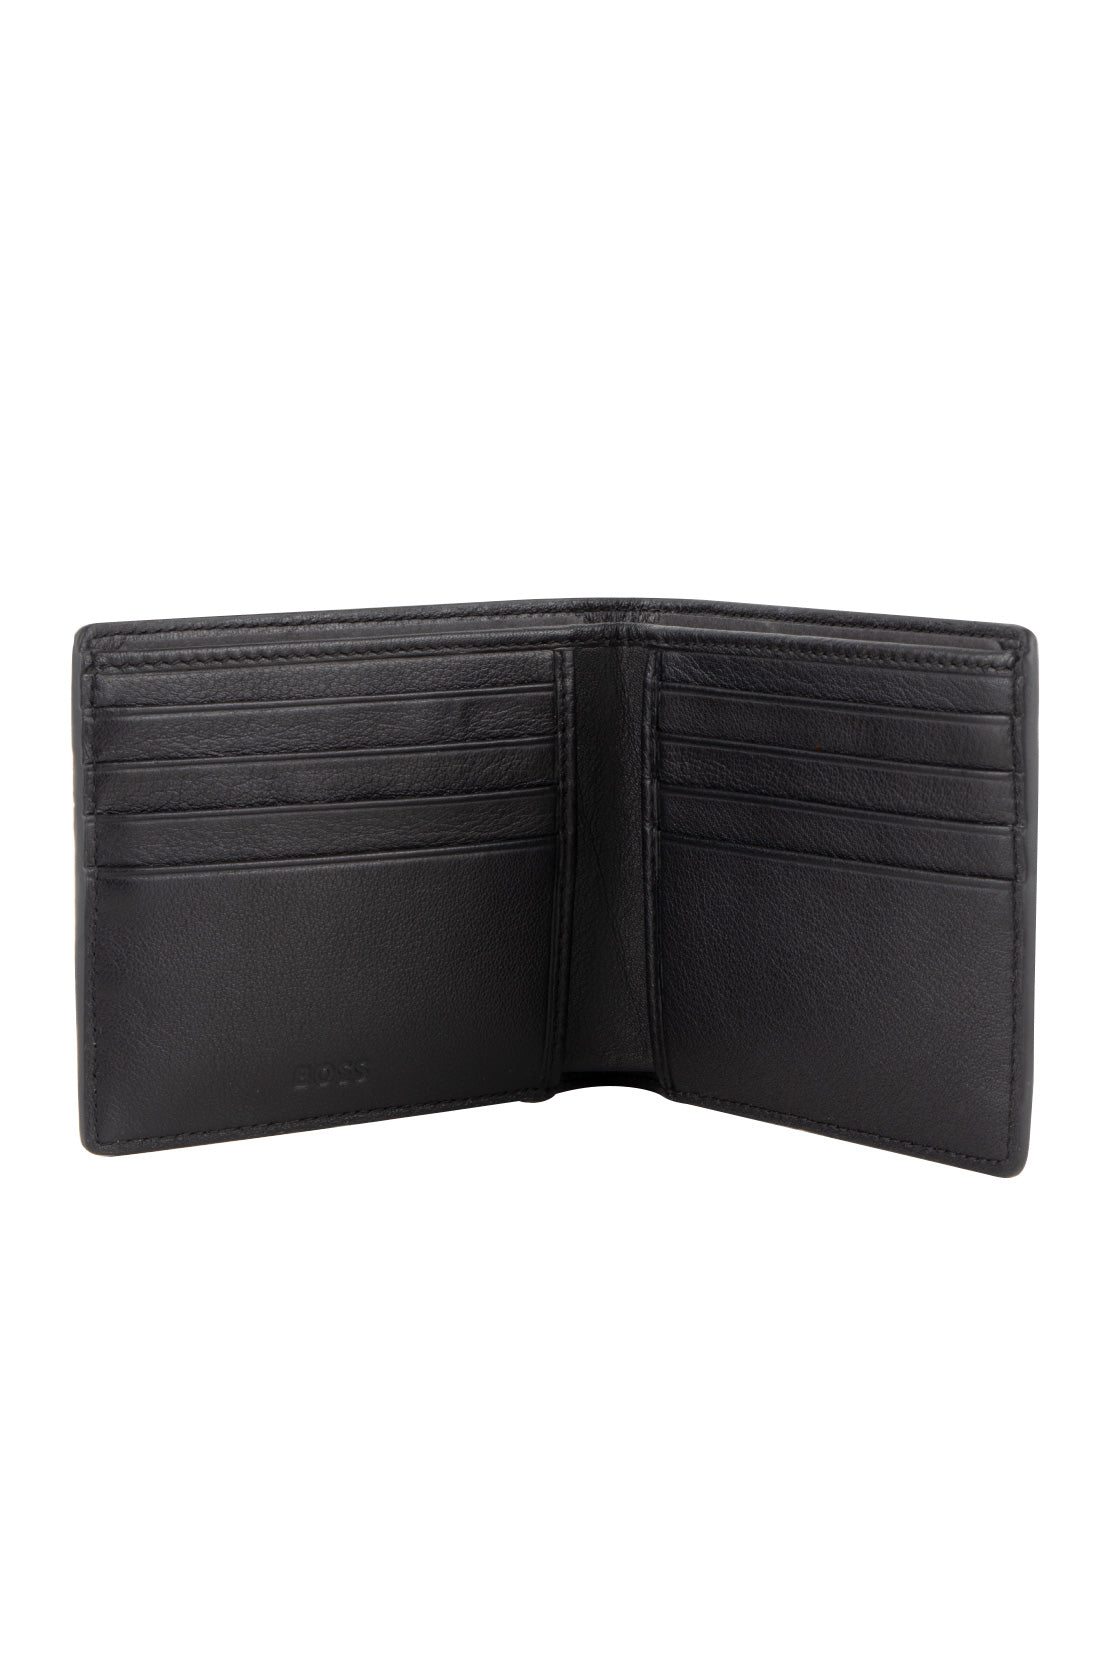 Hugo Boss Gallery Leather Wallet Black